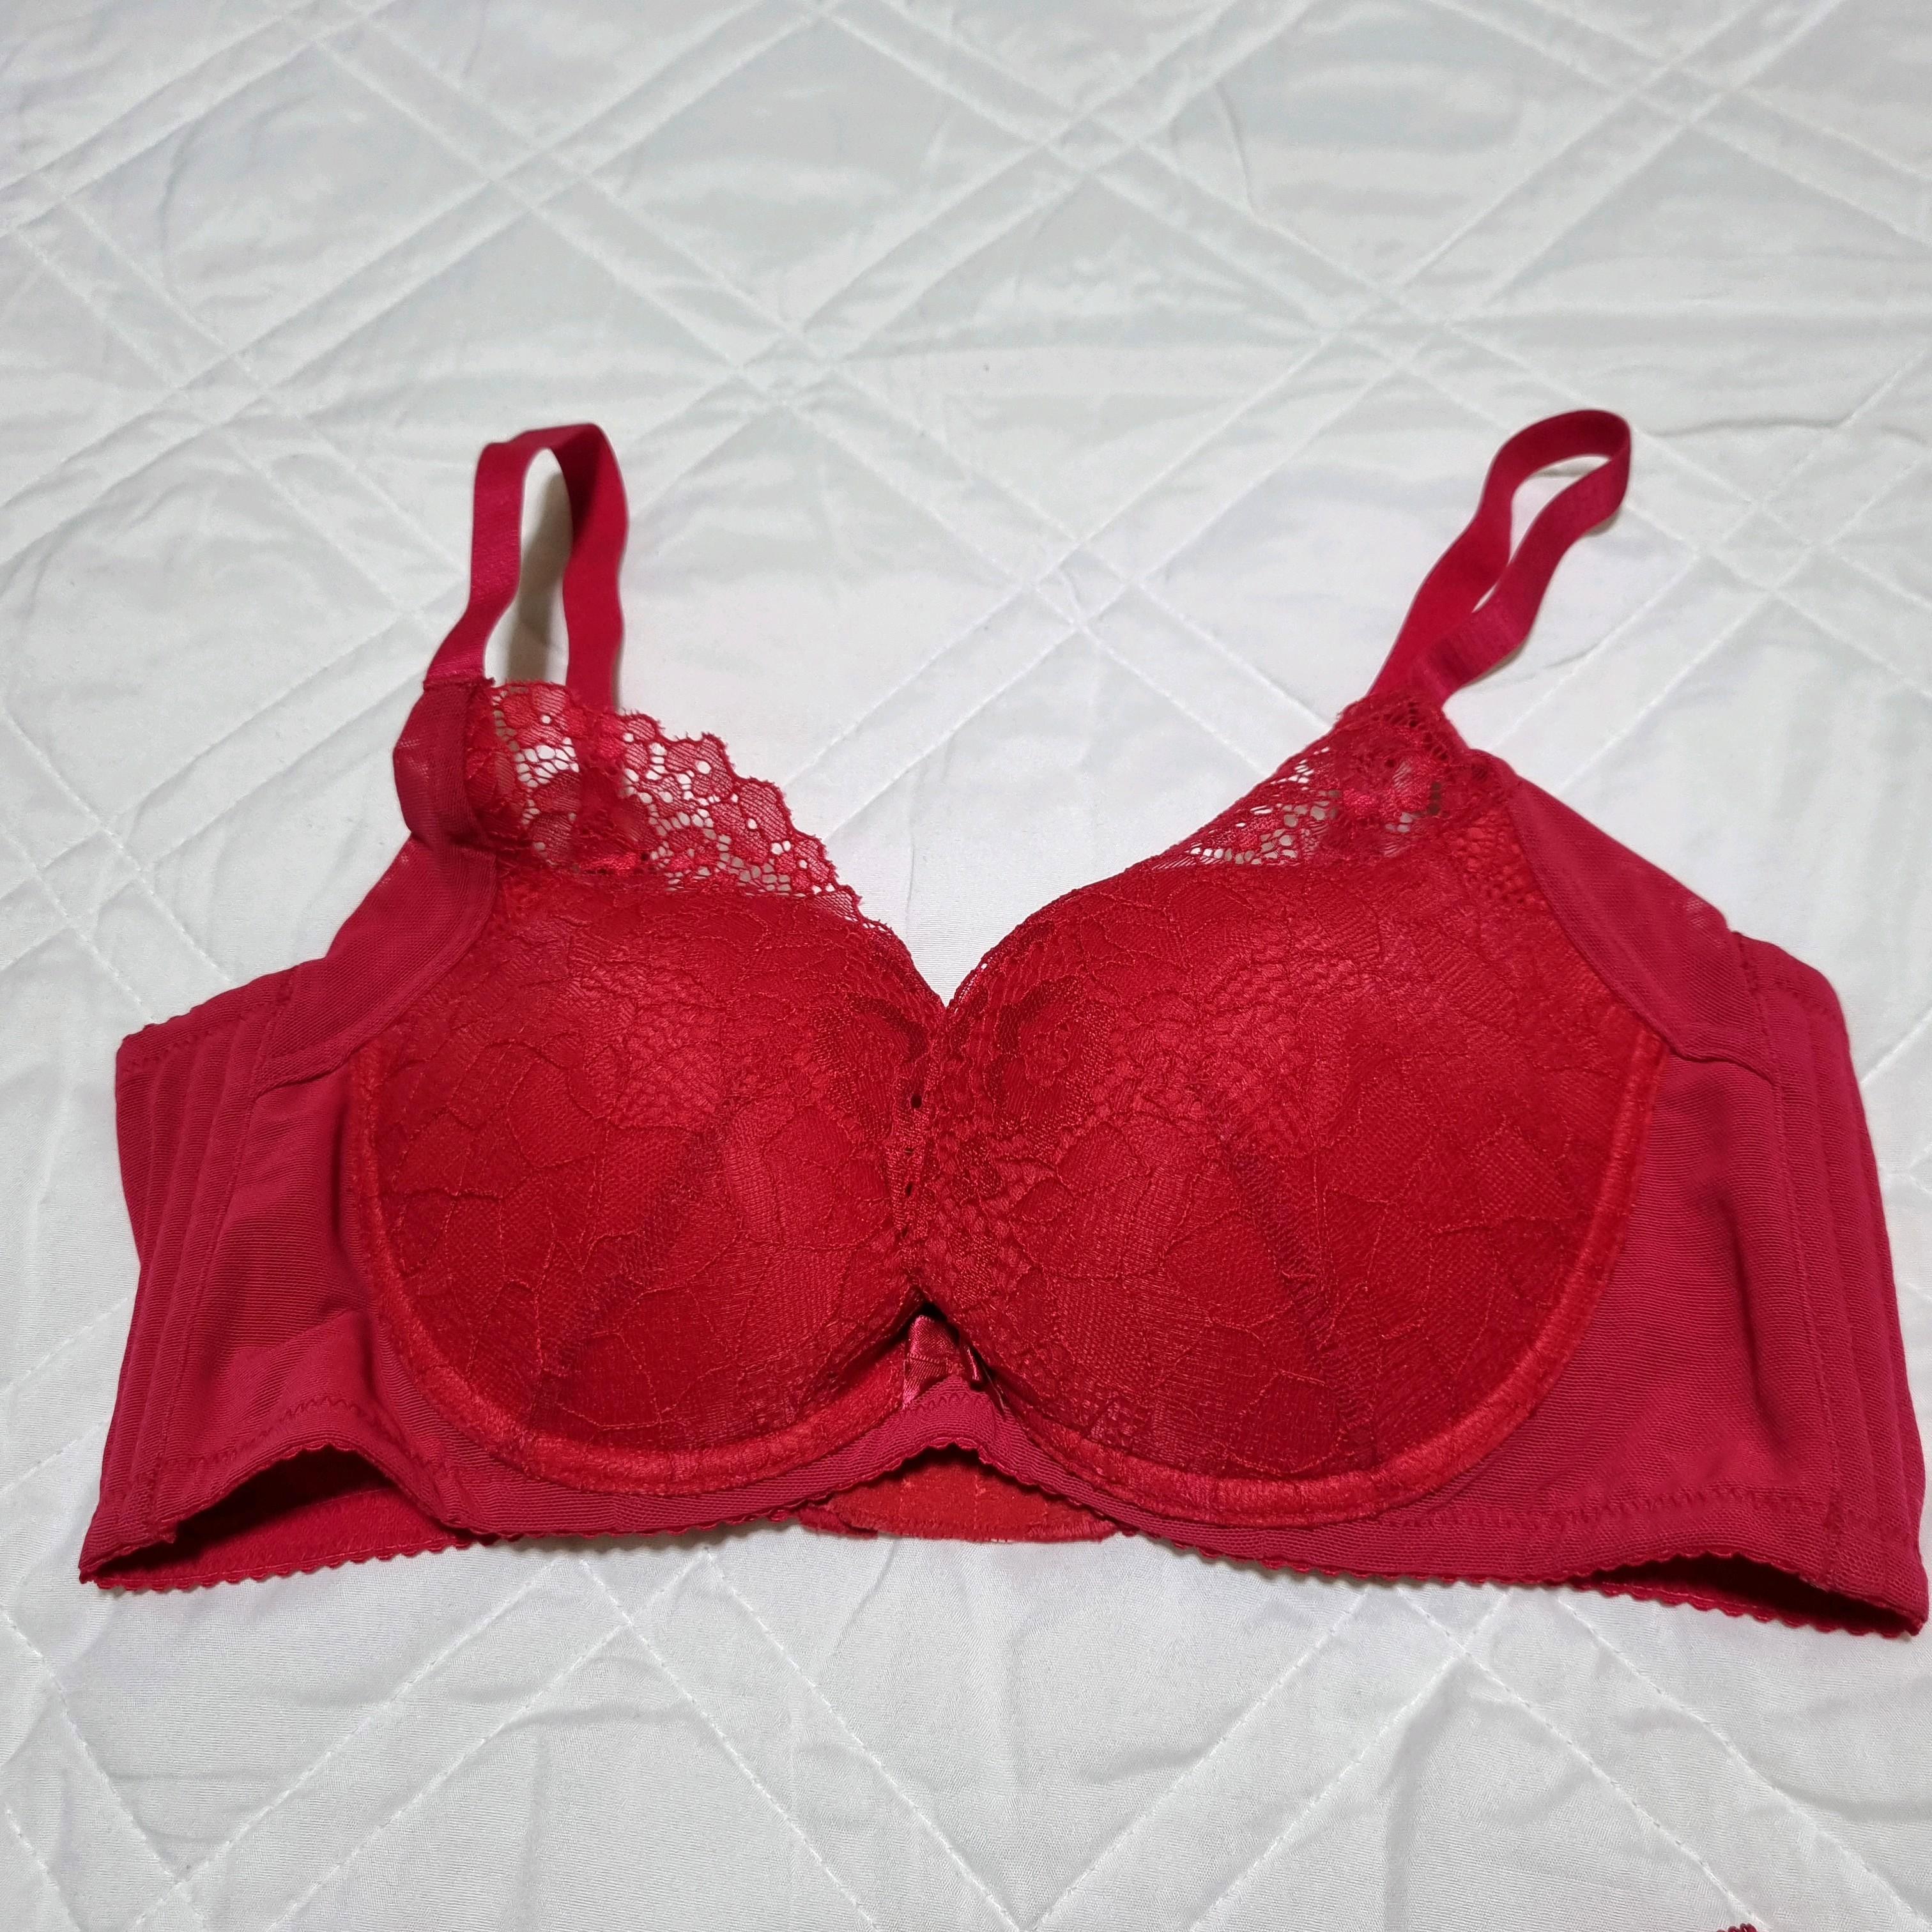 Red Bra & Panty set, Women's Fashion, New Undergarments